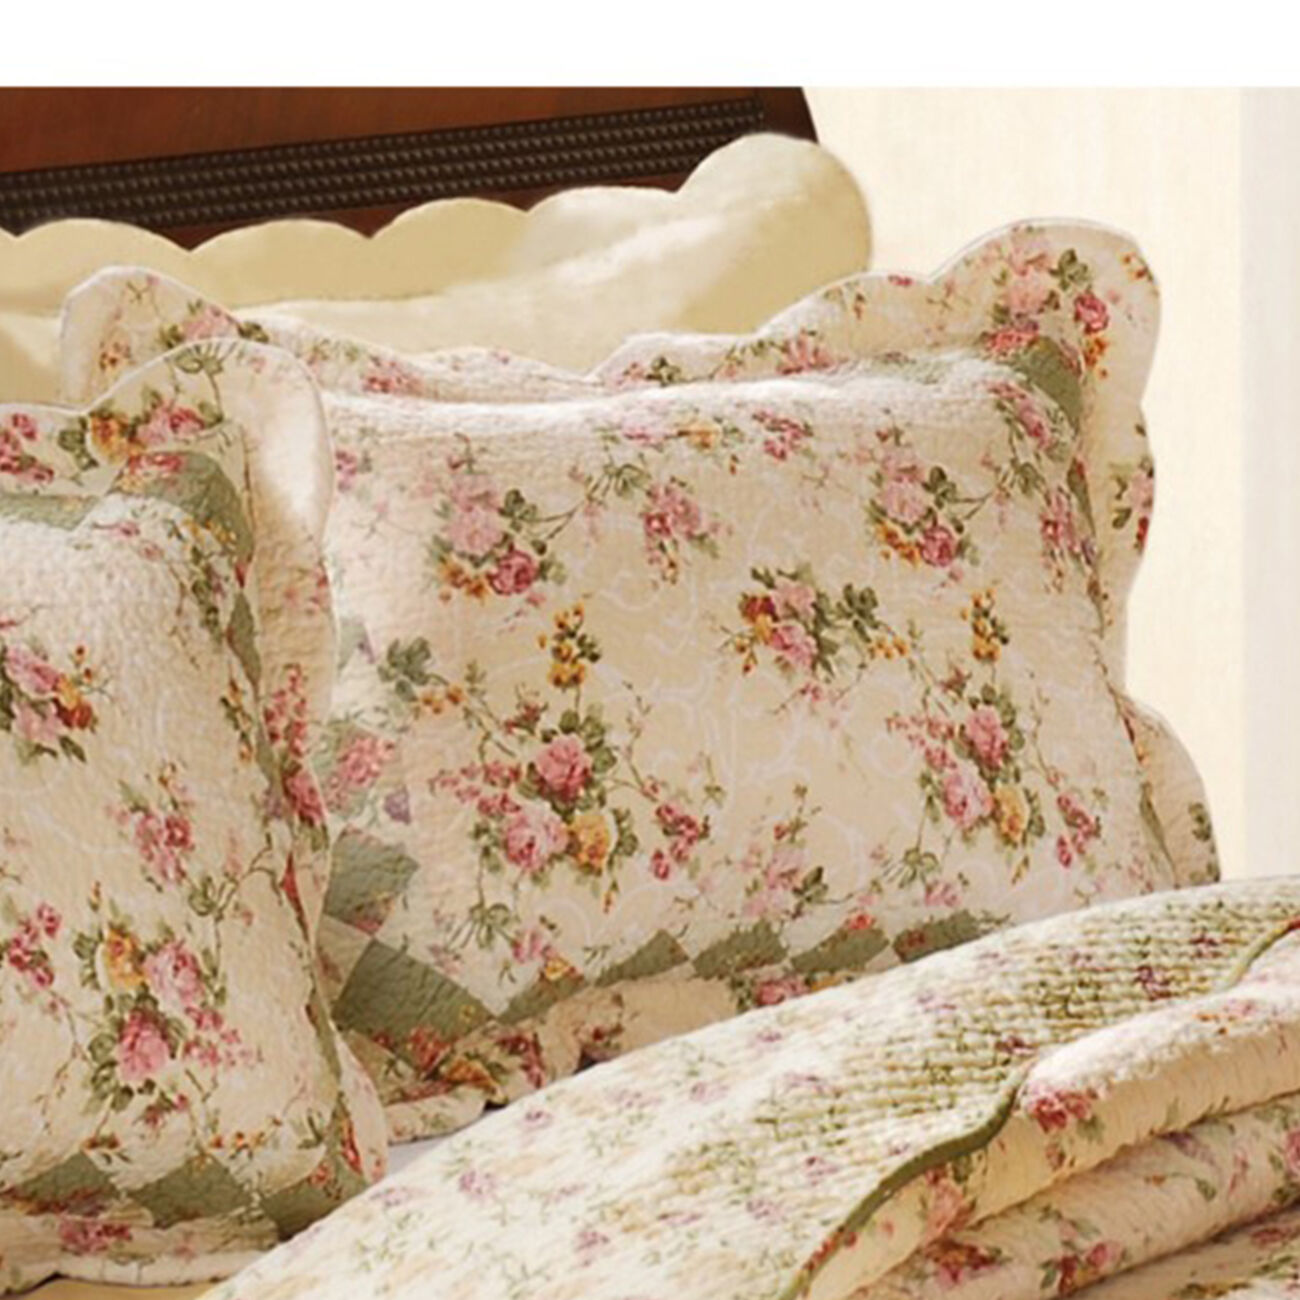 Denali Fabric Standard Size Sham with Floral Prints, Multicolor